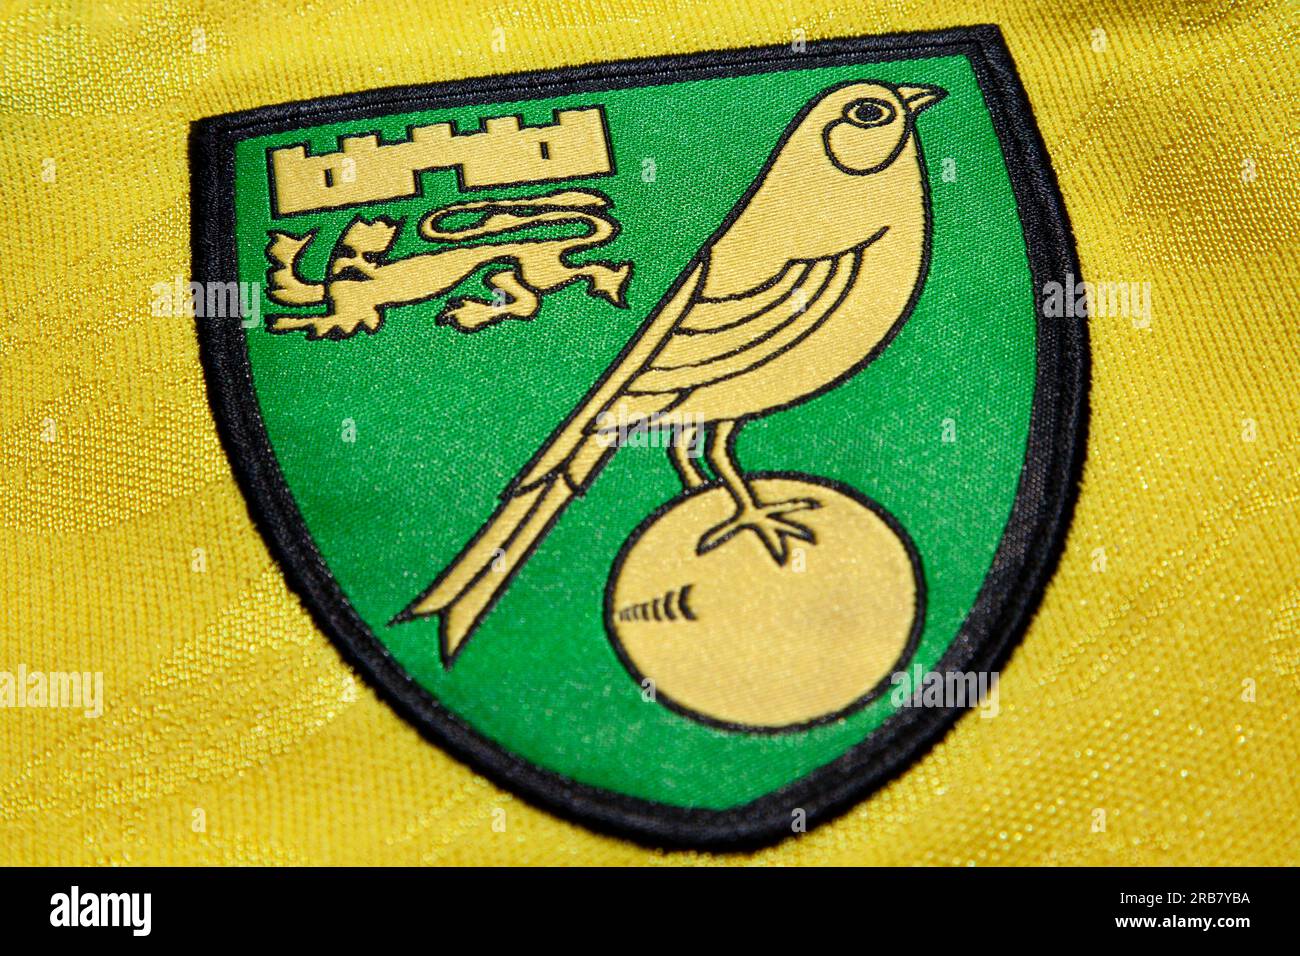 Norwich City FC Club Crest, Stock Photo